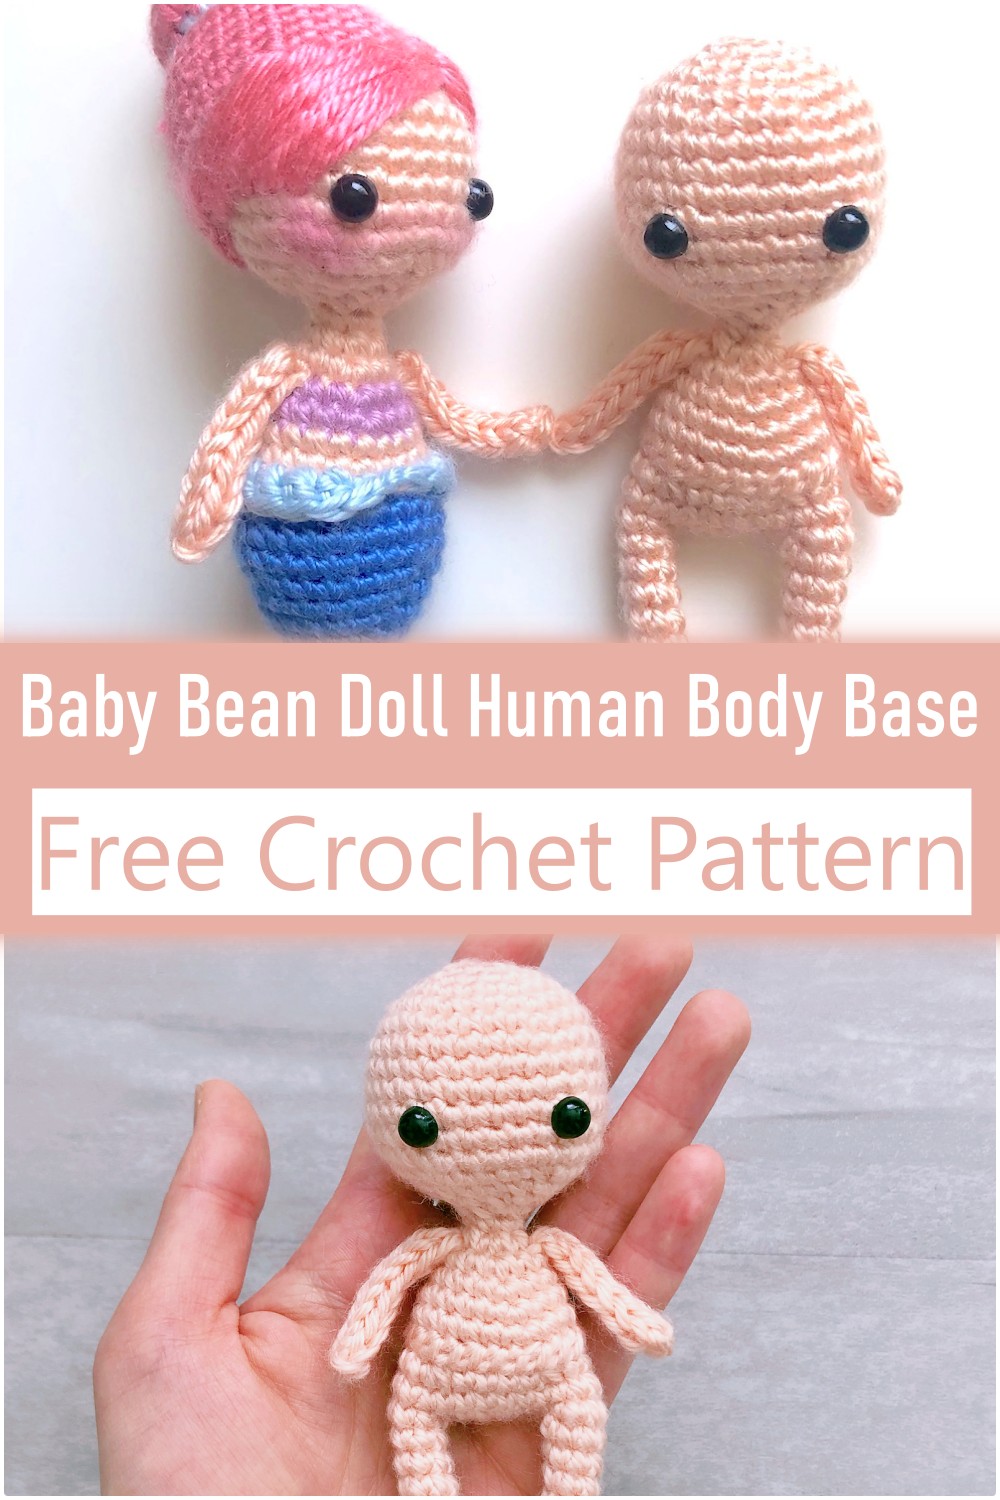 Crochet Baby Bean Doll Human Body Base